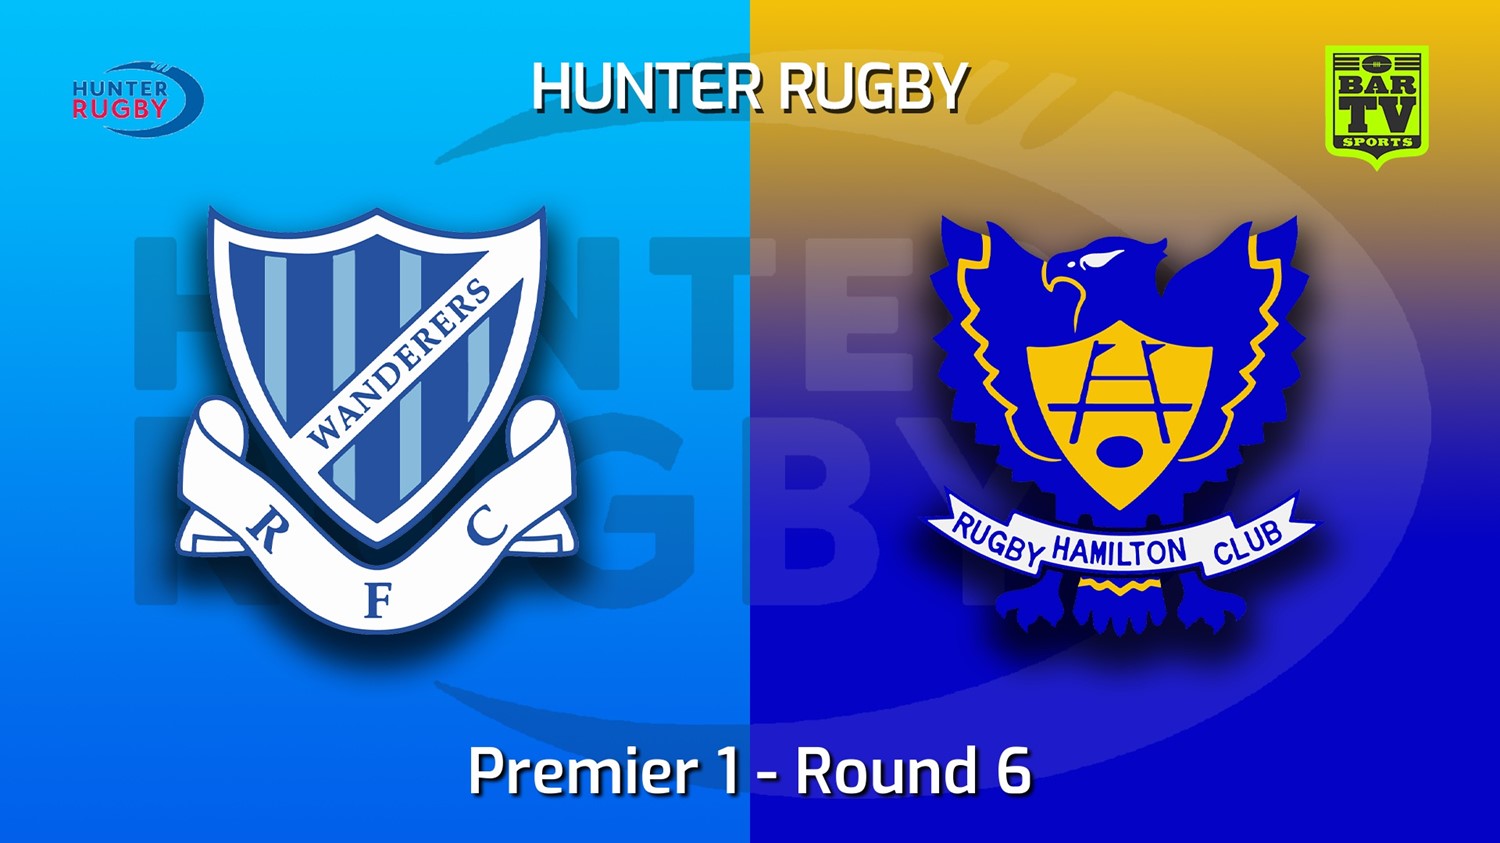 220528-Hunter Rugby Round 6 - Premier 1 - Wanderers v Hamilton Hawks Slate Image